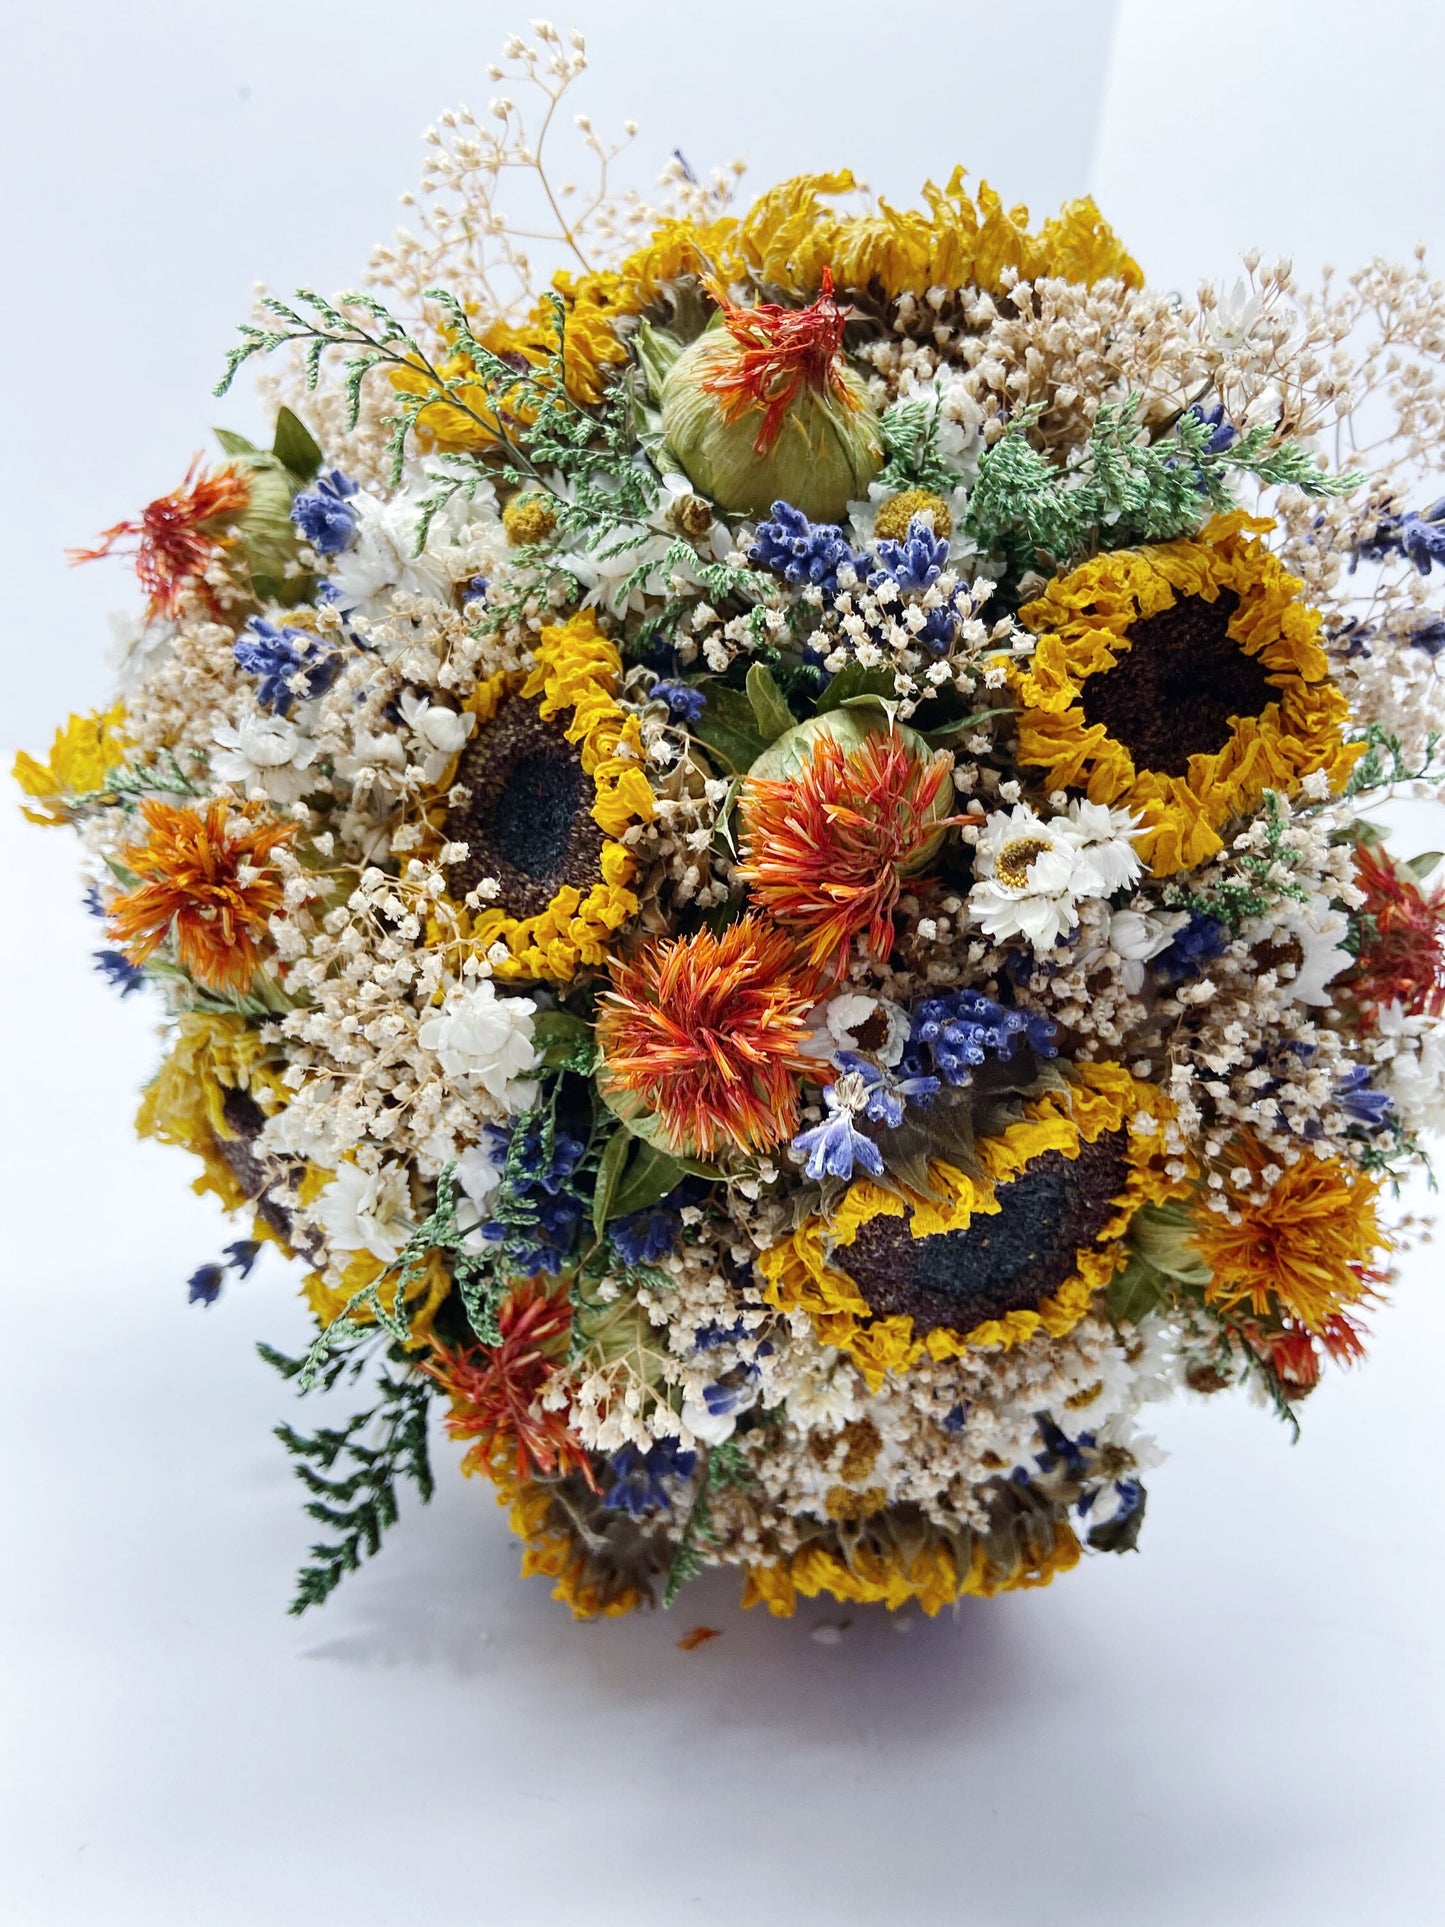 Wedding Bouquet, Wildflowers, Lavender, sunflowers, Caspia, mini gyp, safflower, ammobium, house decor, wedding bouquet, throw